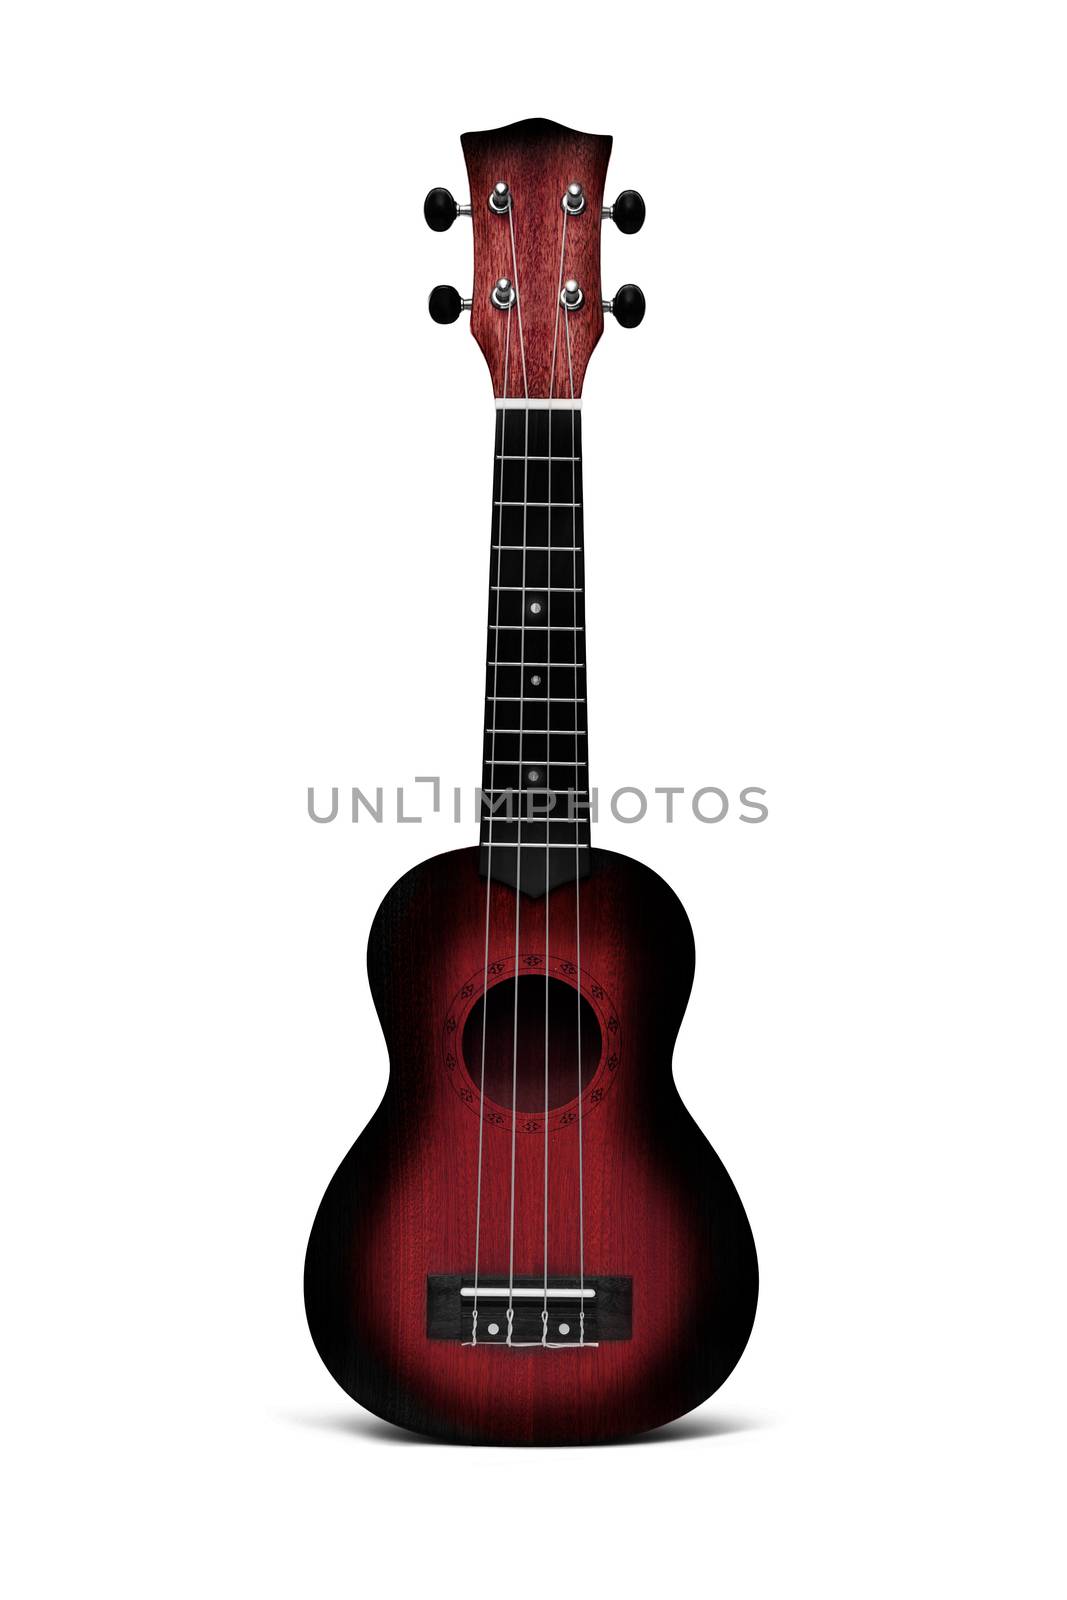 The dark red ukulele guitar by SlayCer